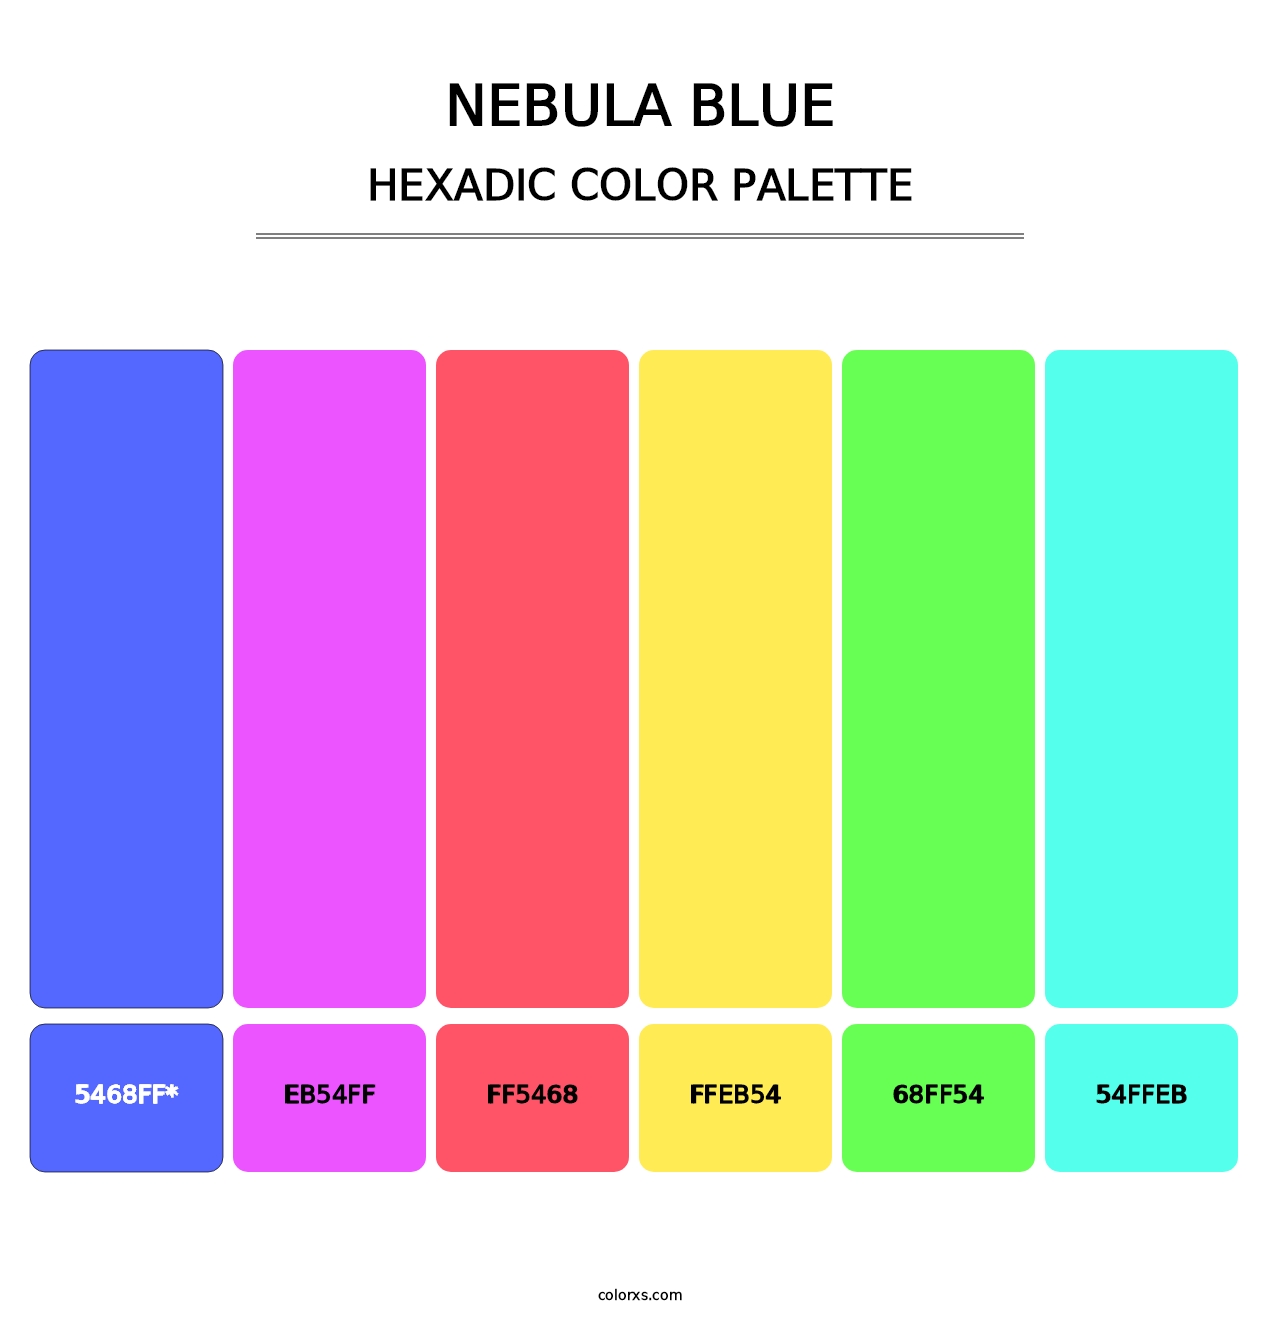 Nebula Blue - Hexadic Color Palette